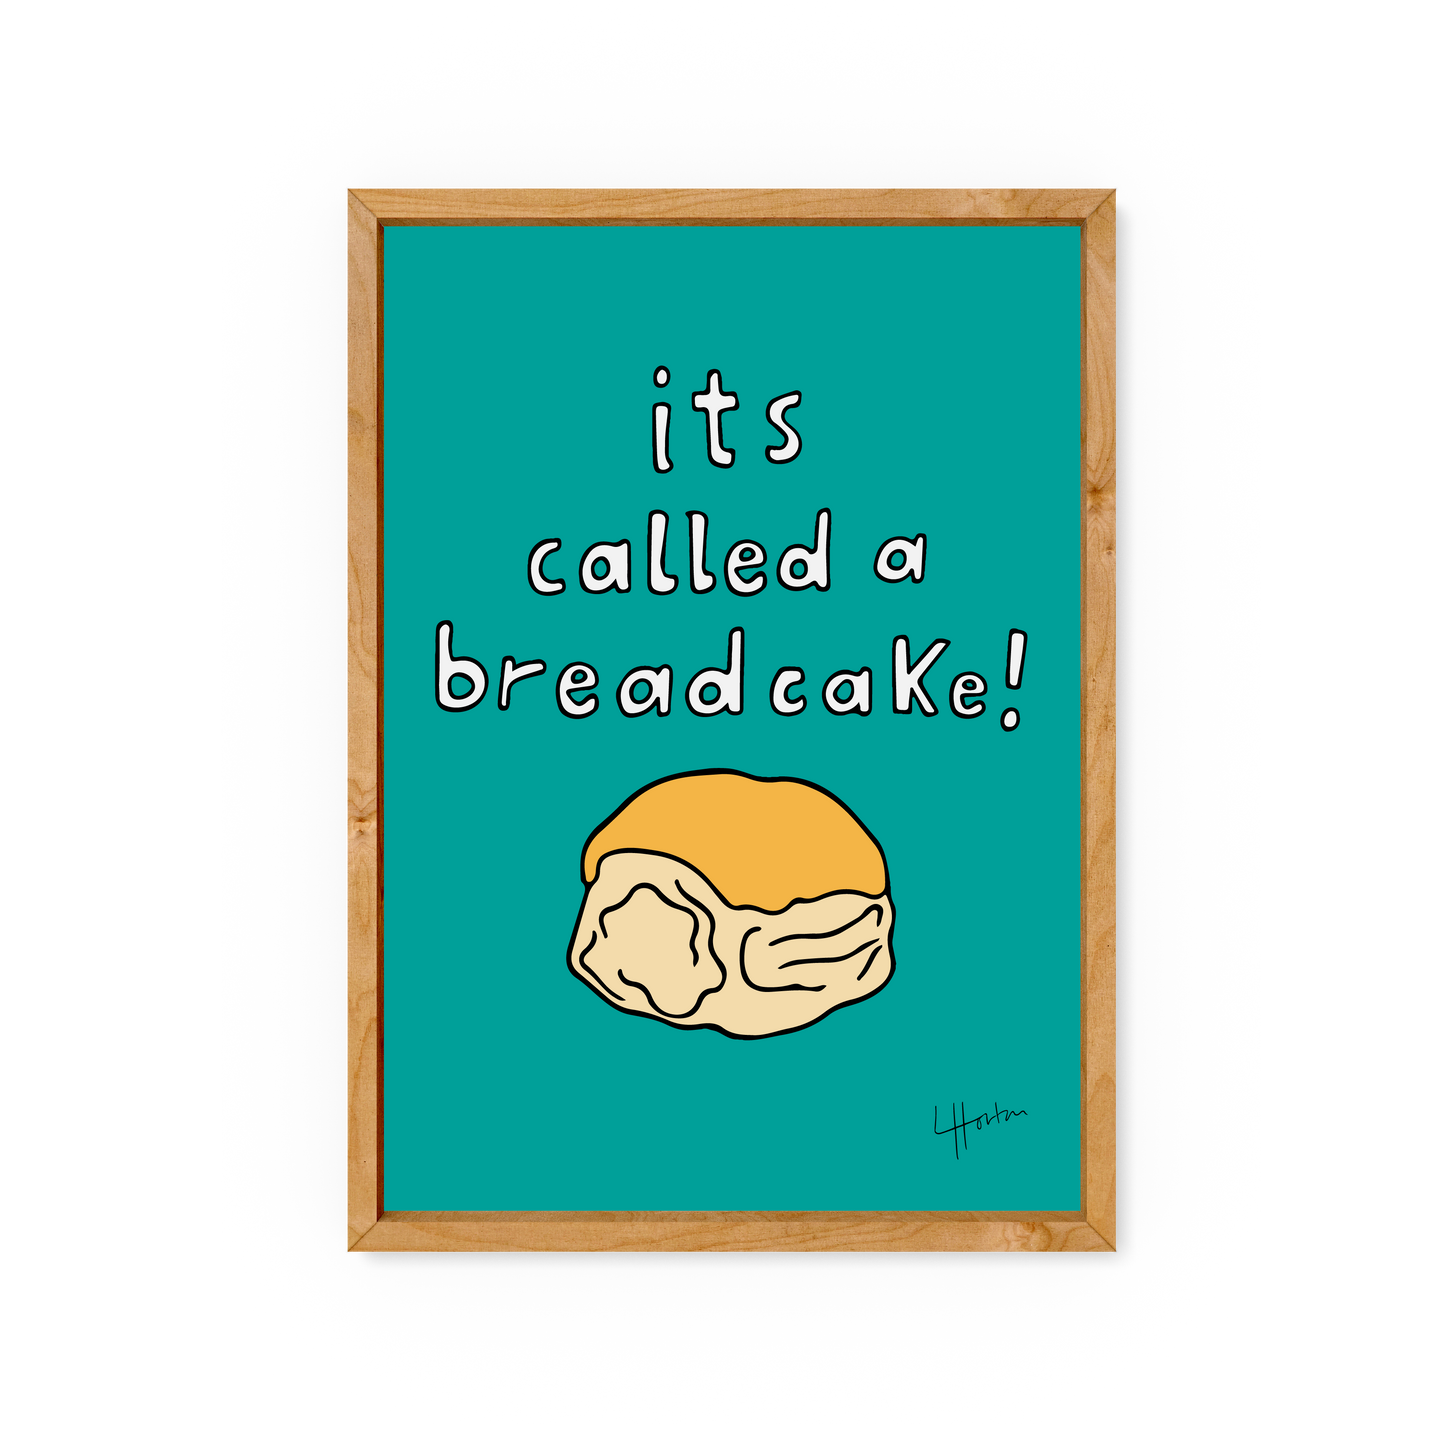 Breadcake - Sheffield Art Print - Luke Horton